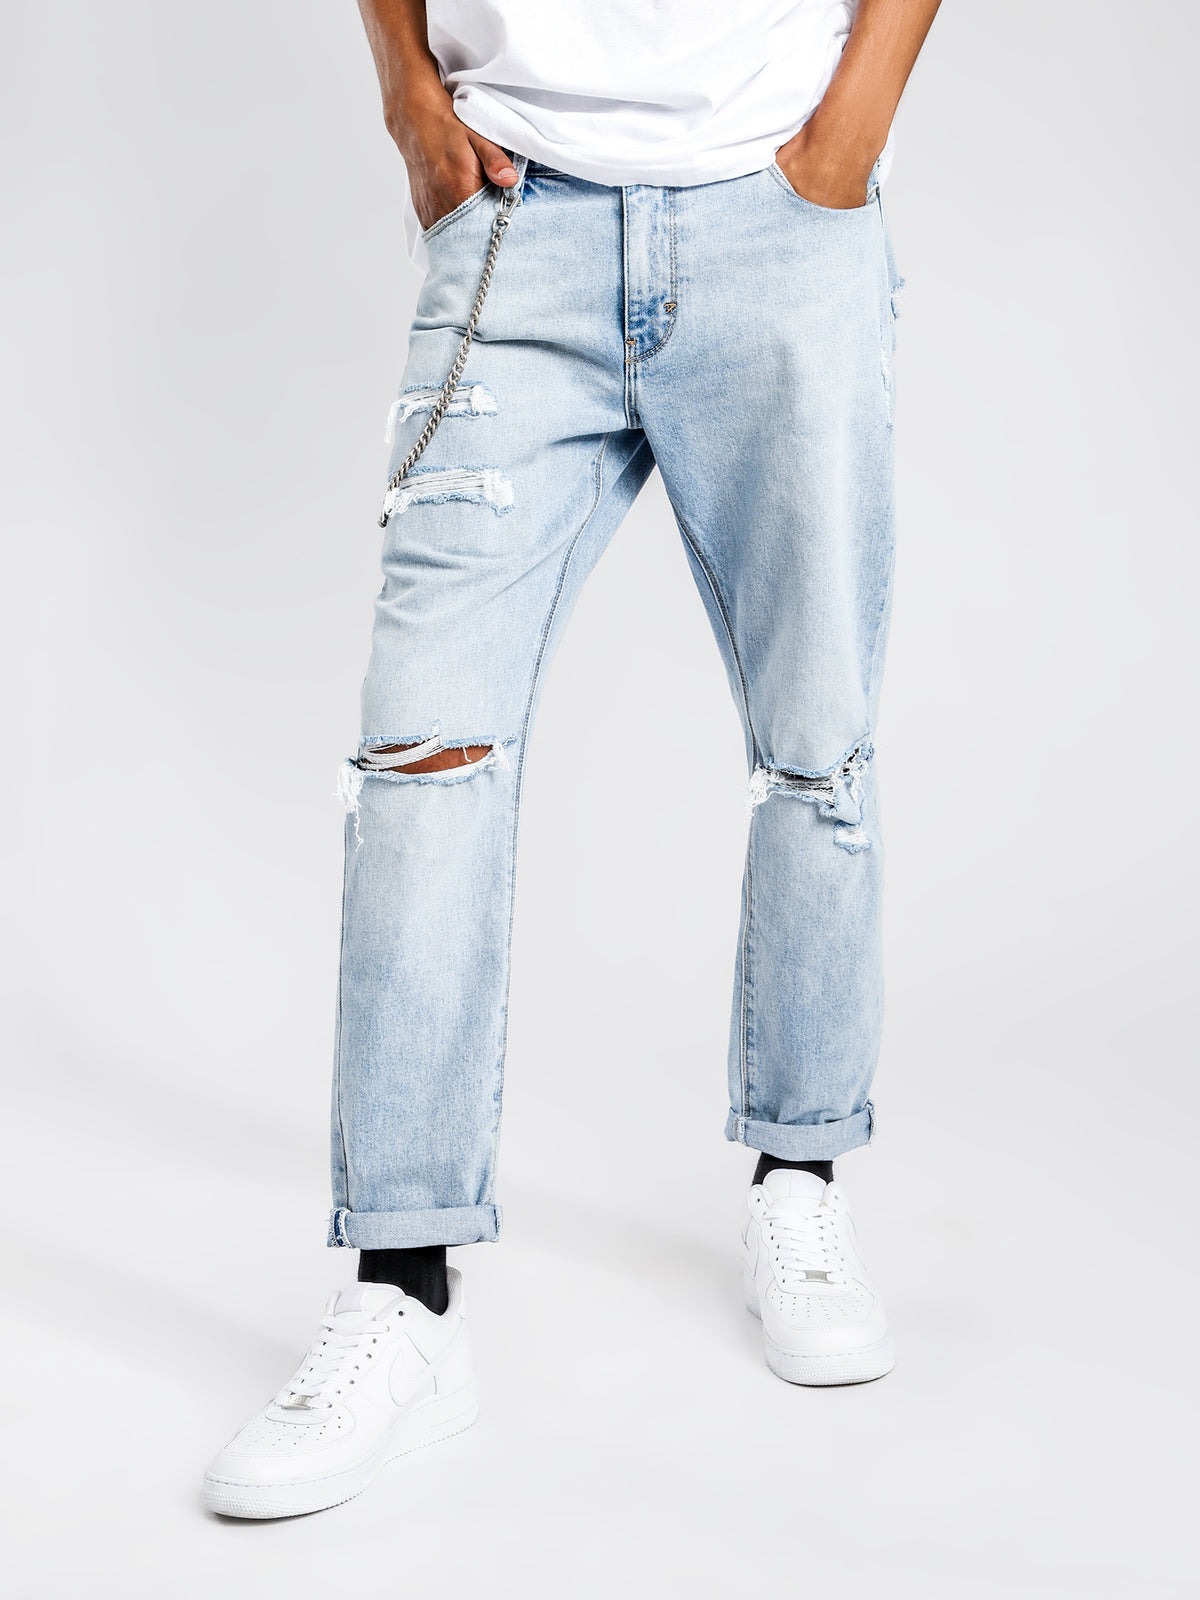 A Dropped Slim Turn Up Jeans in Rogue Bleach Blue Denim